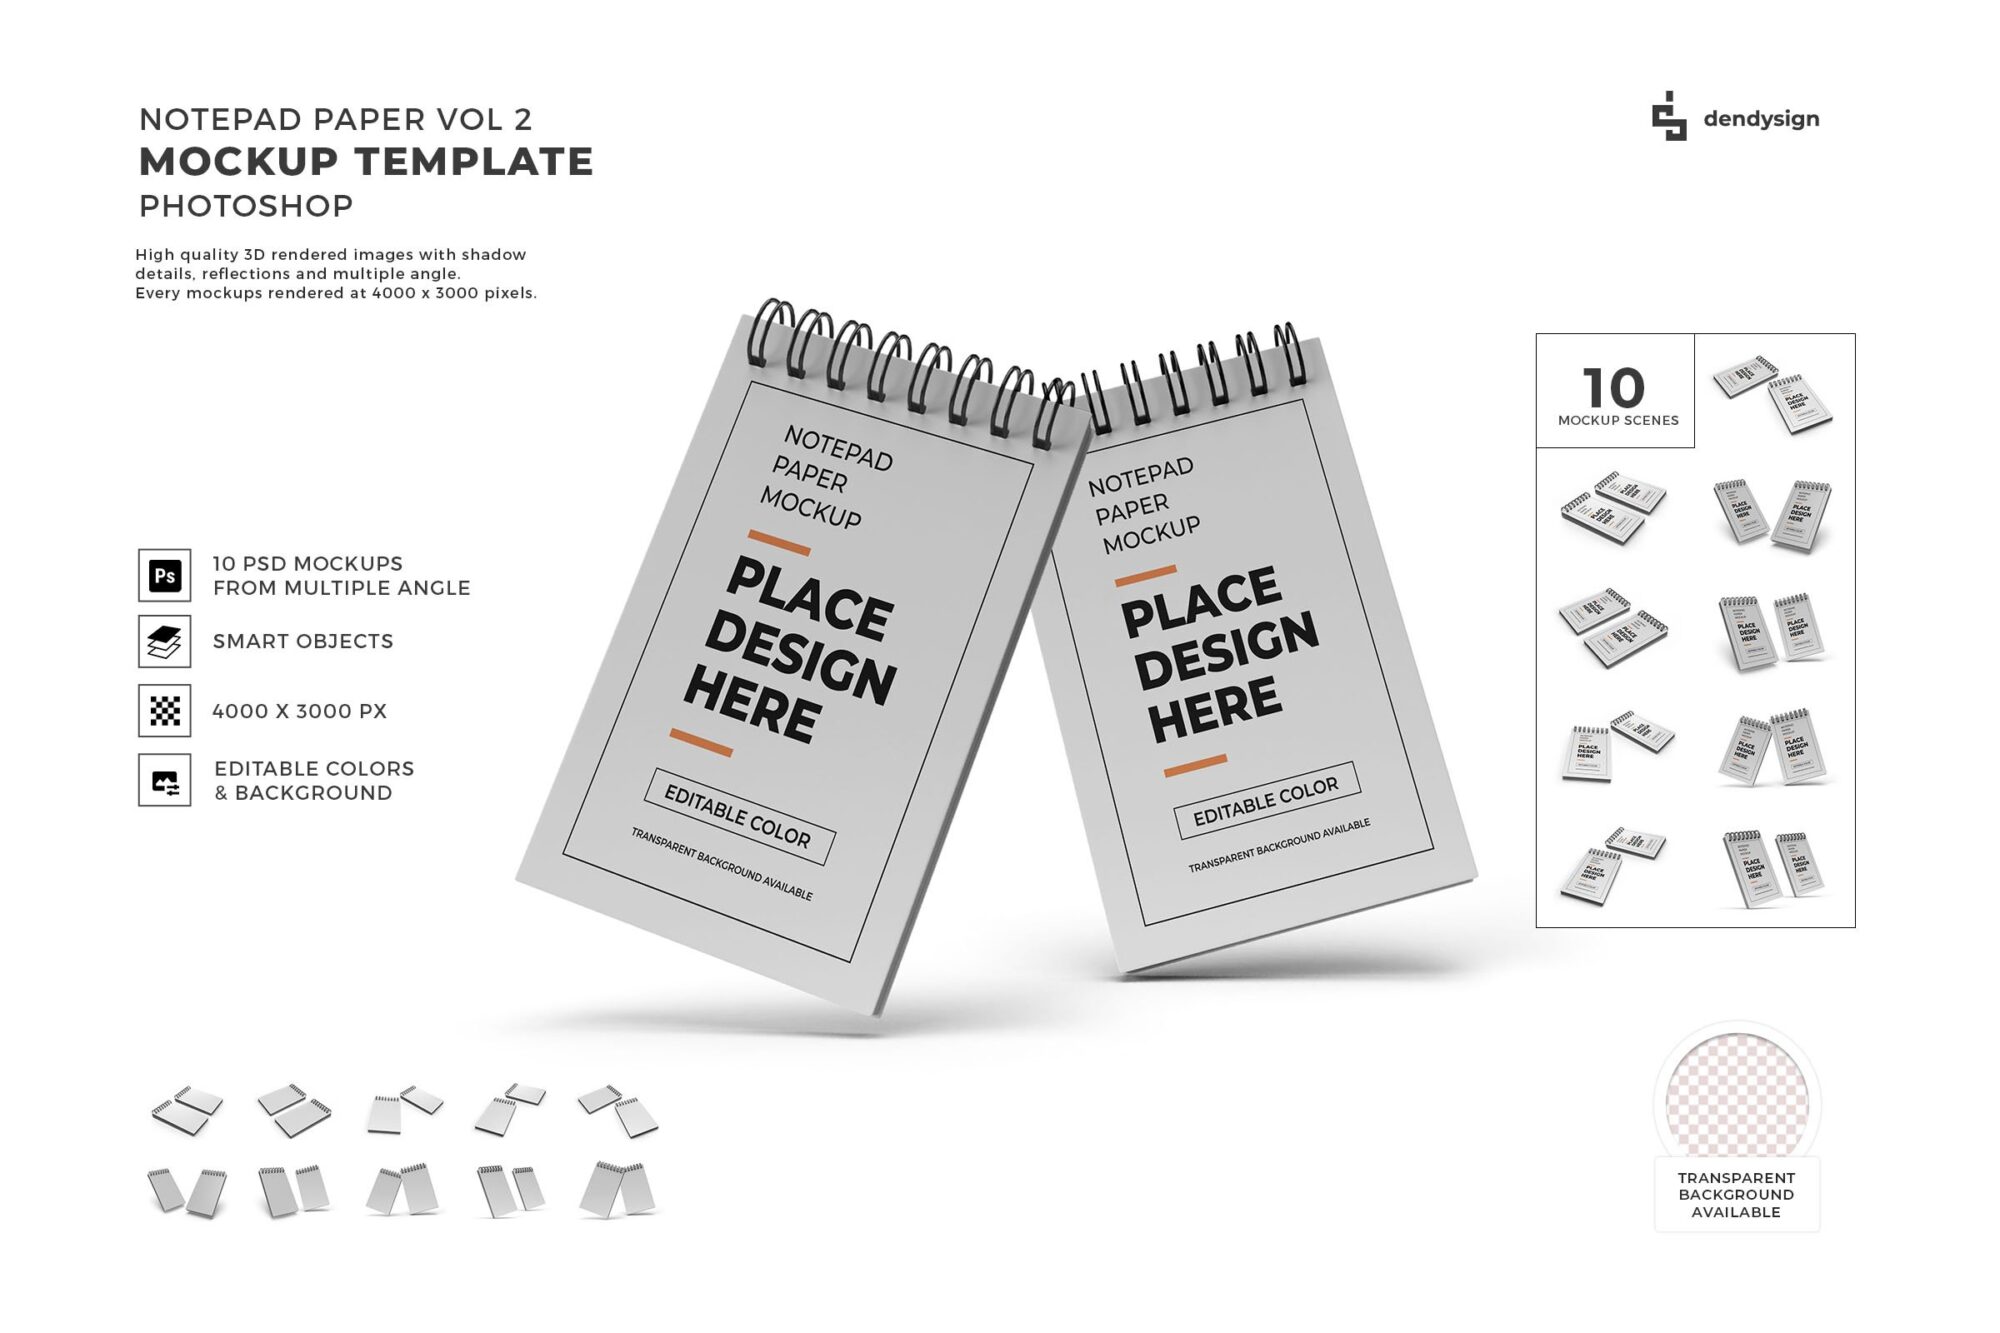 موك اب ورق المفكرة Notepad Paper Mockup Template Set Vol 2 - 32551516